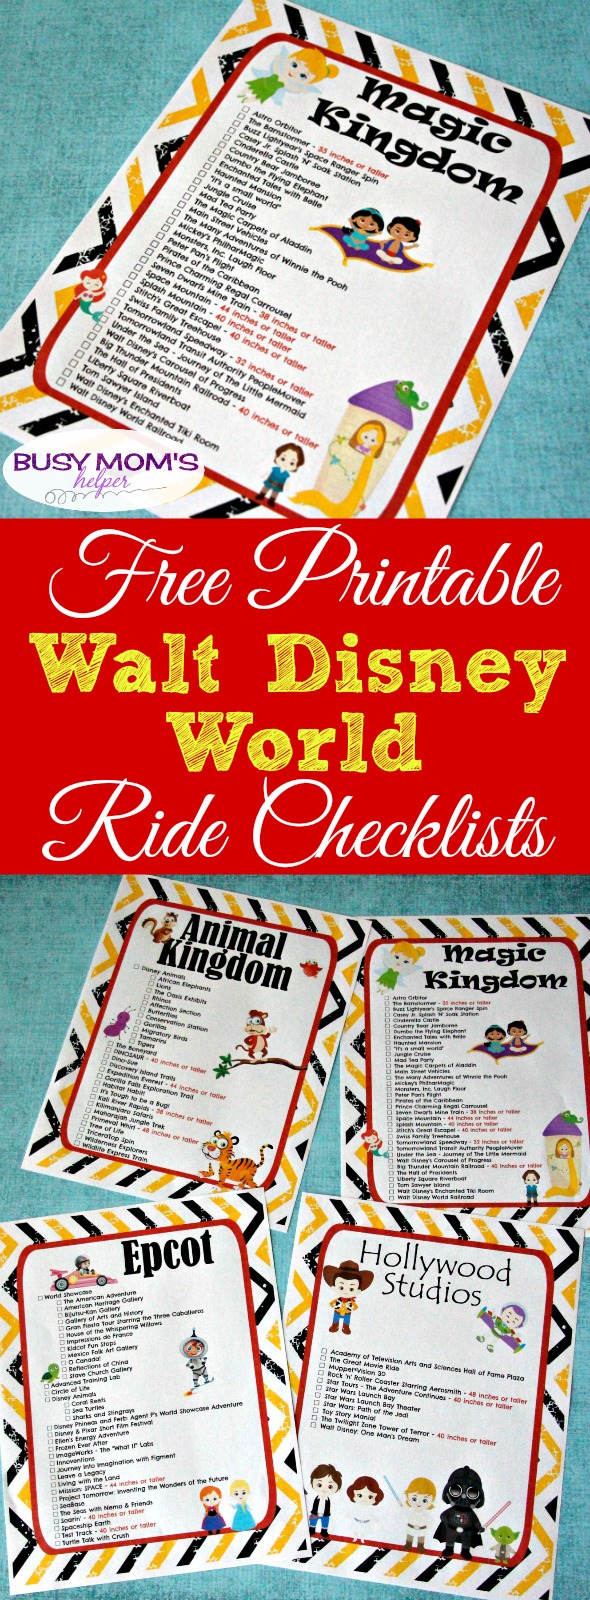 Free Printable Walt Disney World Ride Checklists